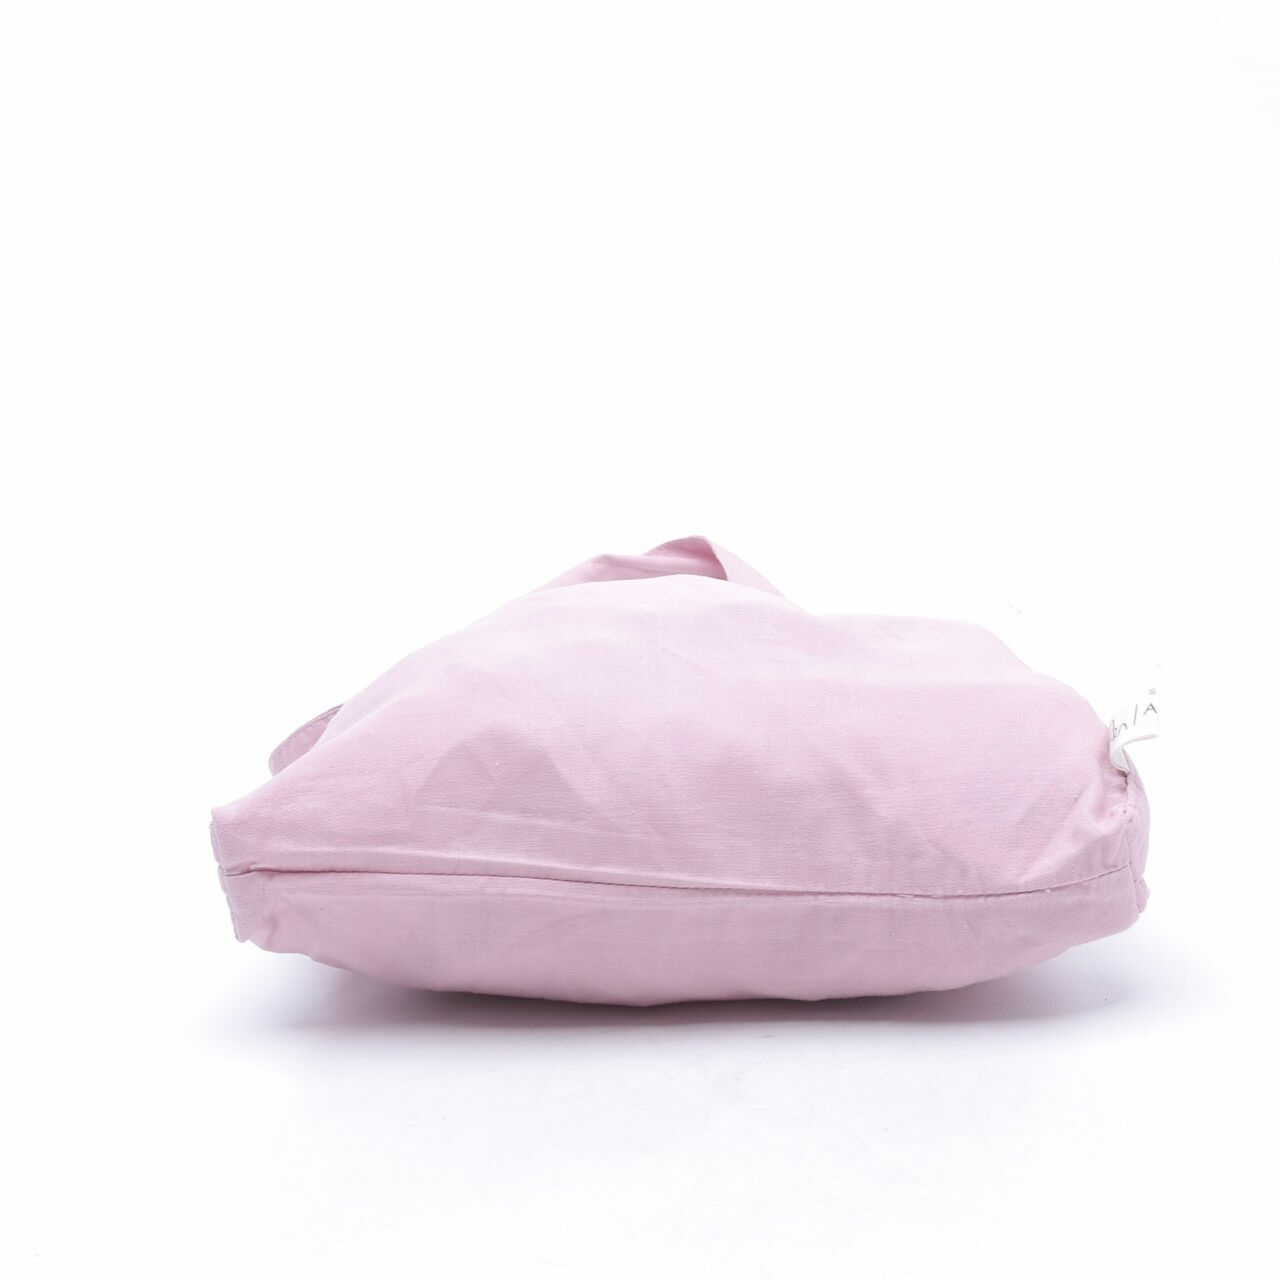 Private Collection Pink Shoulder Bag